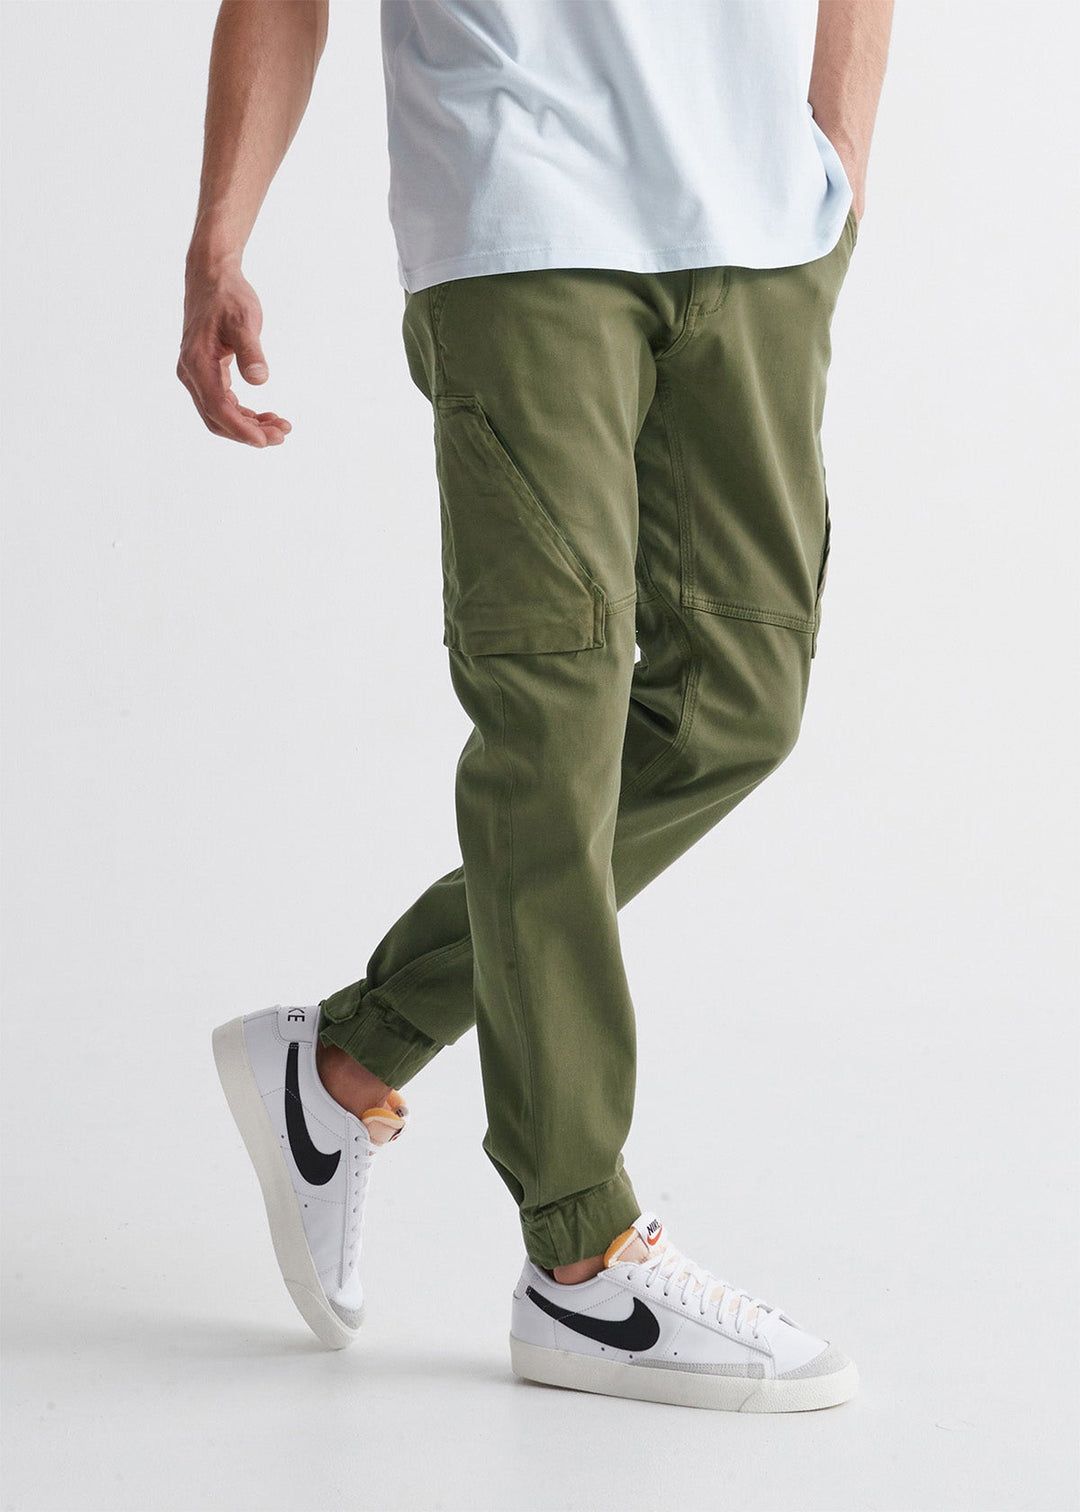 Generic Black Cargo Pants Men Hip Hop Streetwear Joggers Sweatpant Fashion  Harajuku Harem Pant MultiPocket Casual Mens Pants  Best Price Online   Jumia Egypt